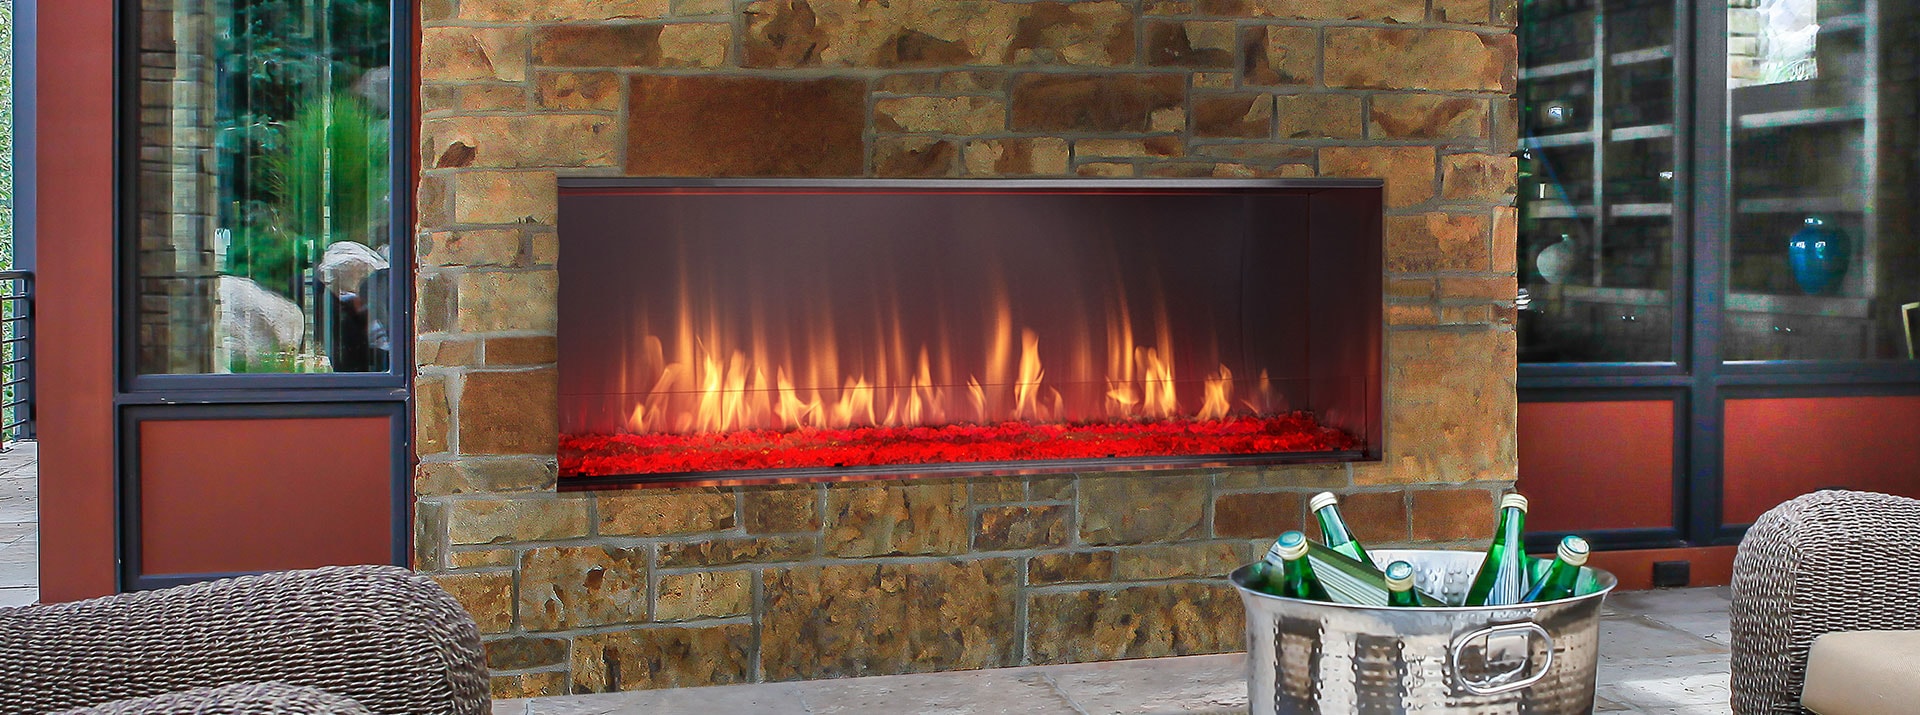 Linear Vent Free Gas Fireplace Inspirational Lanai Gas Outdoor Fireplace